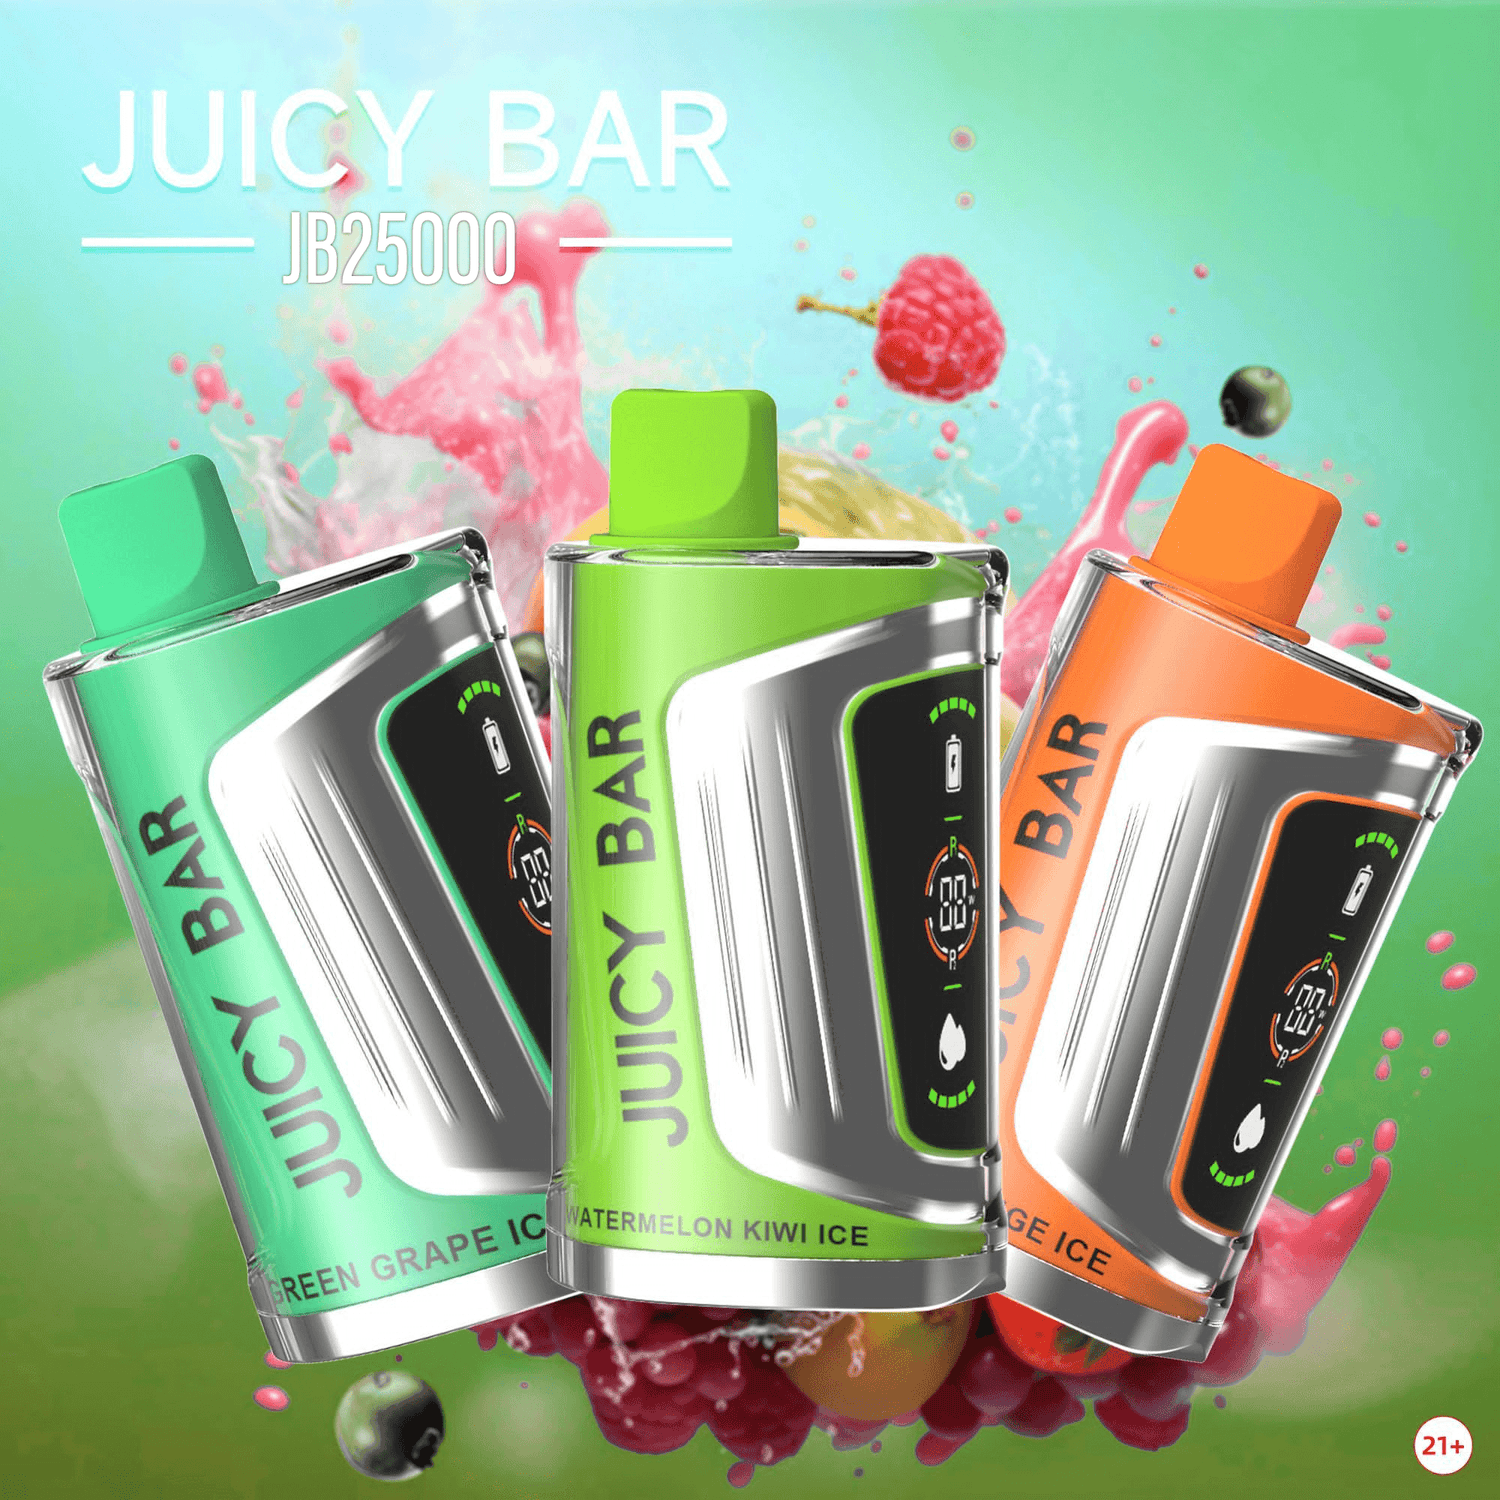 Juicy-Bar-JB25000-Pro-Max-Graphic